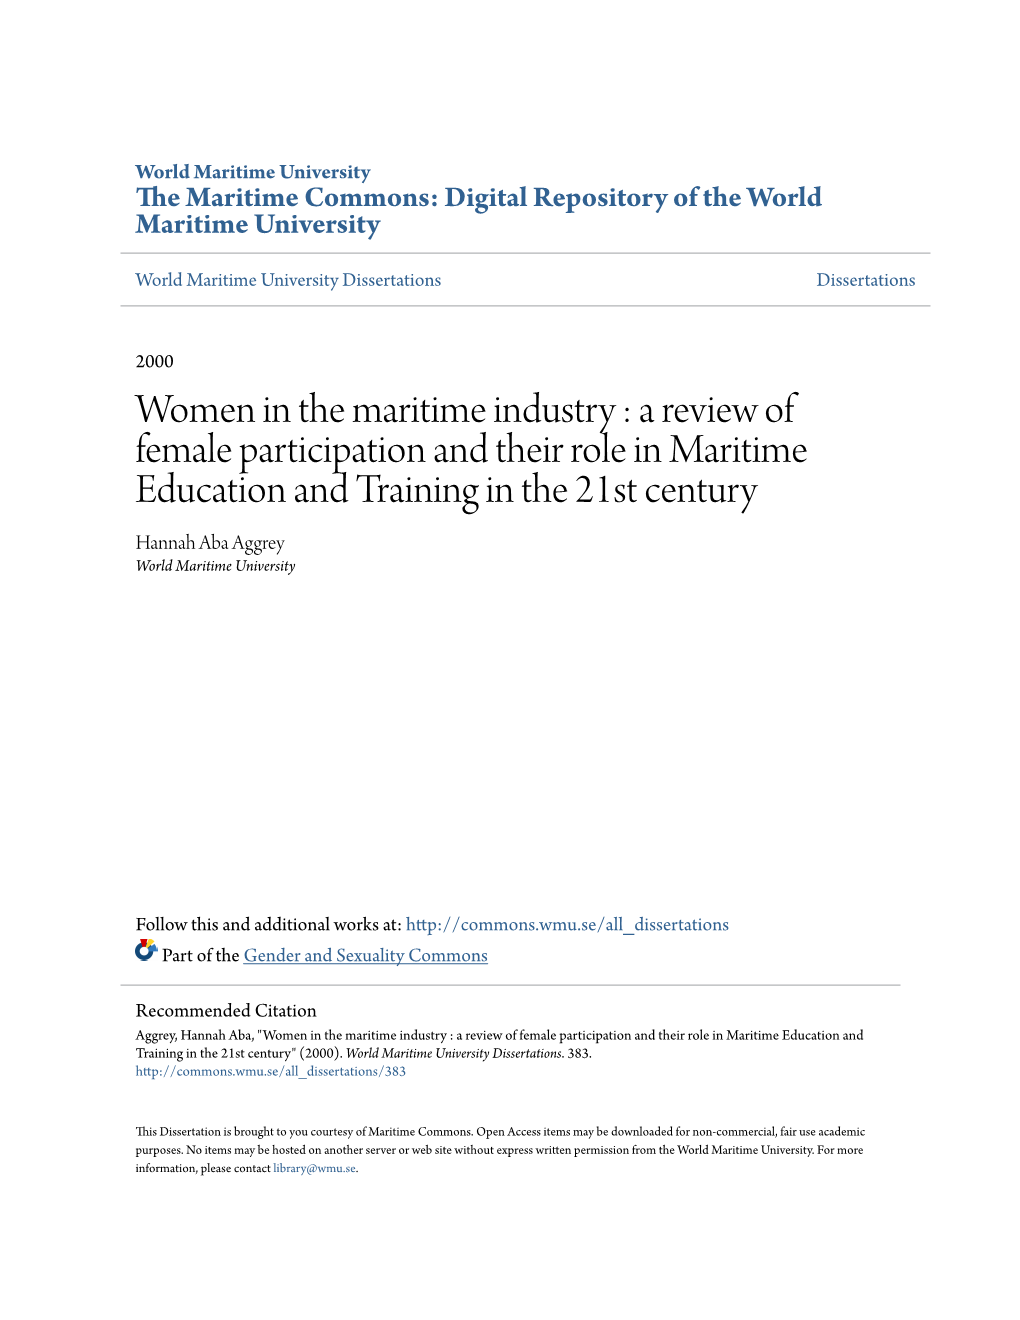 Women in the Maritime Industry